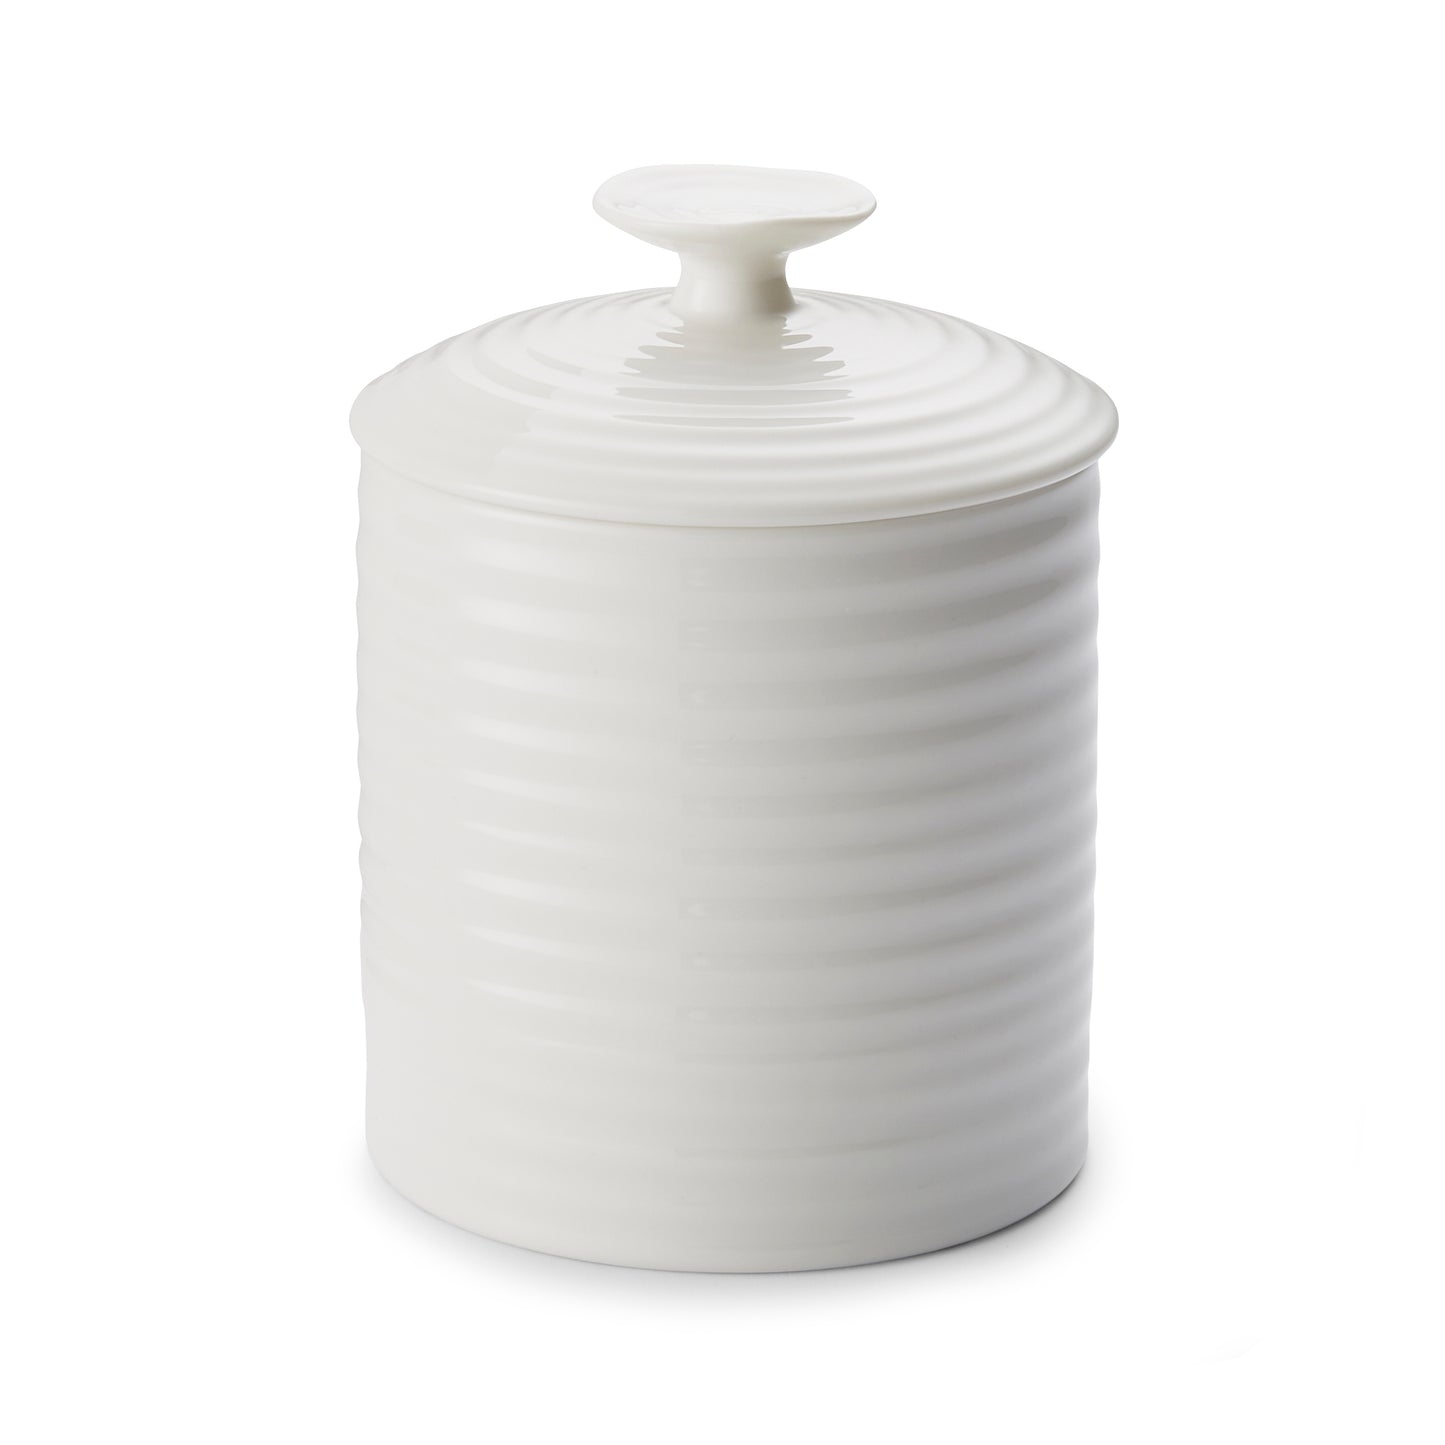 Sophie Conran for Portmeirion White Small Storage Jar 10.5cm